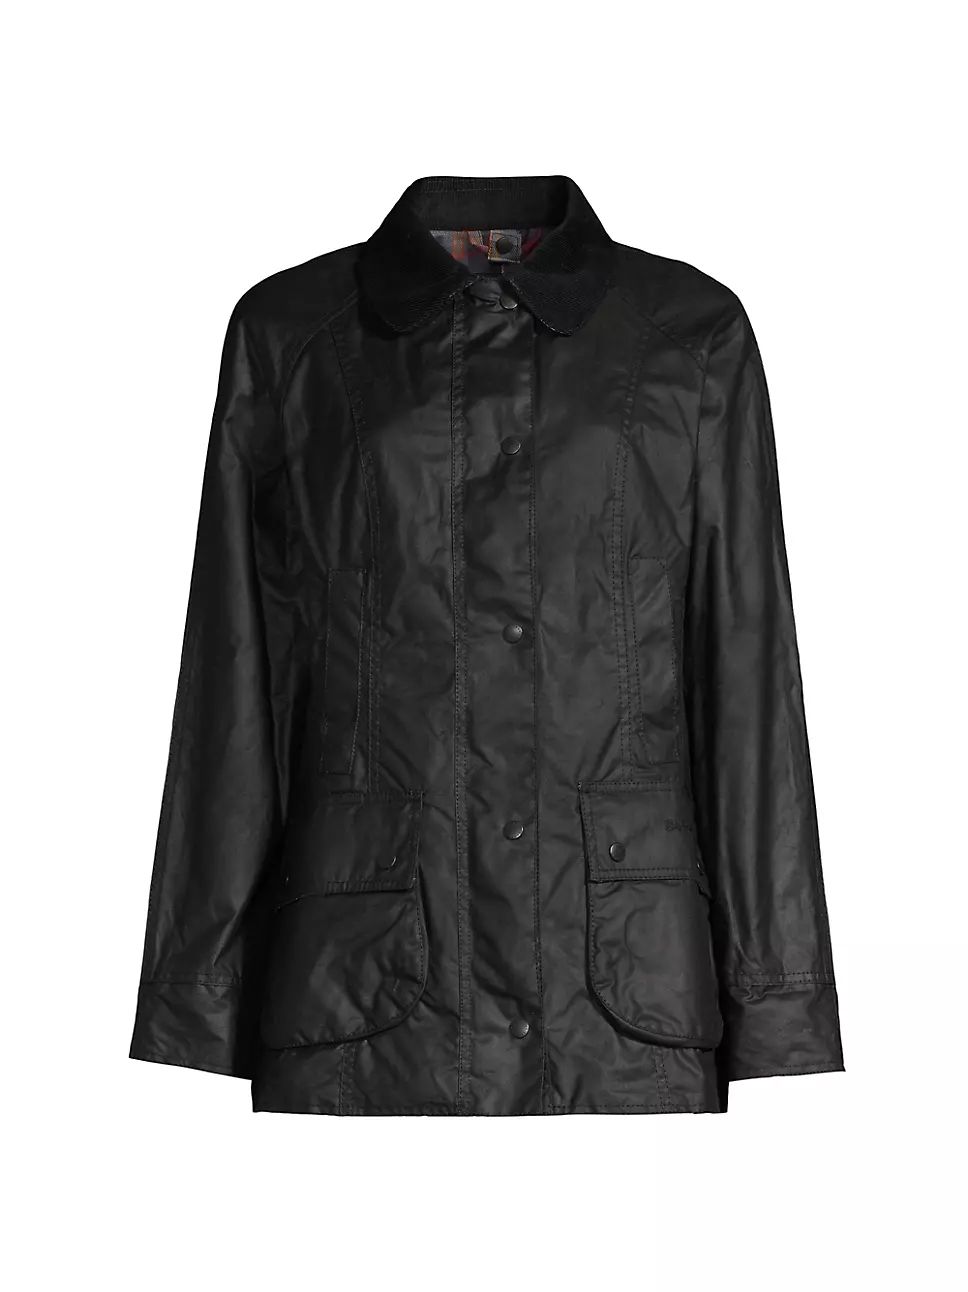 Beadnell Waxed Cotton Jacket | Saks Fifth Avenue